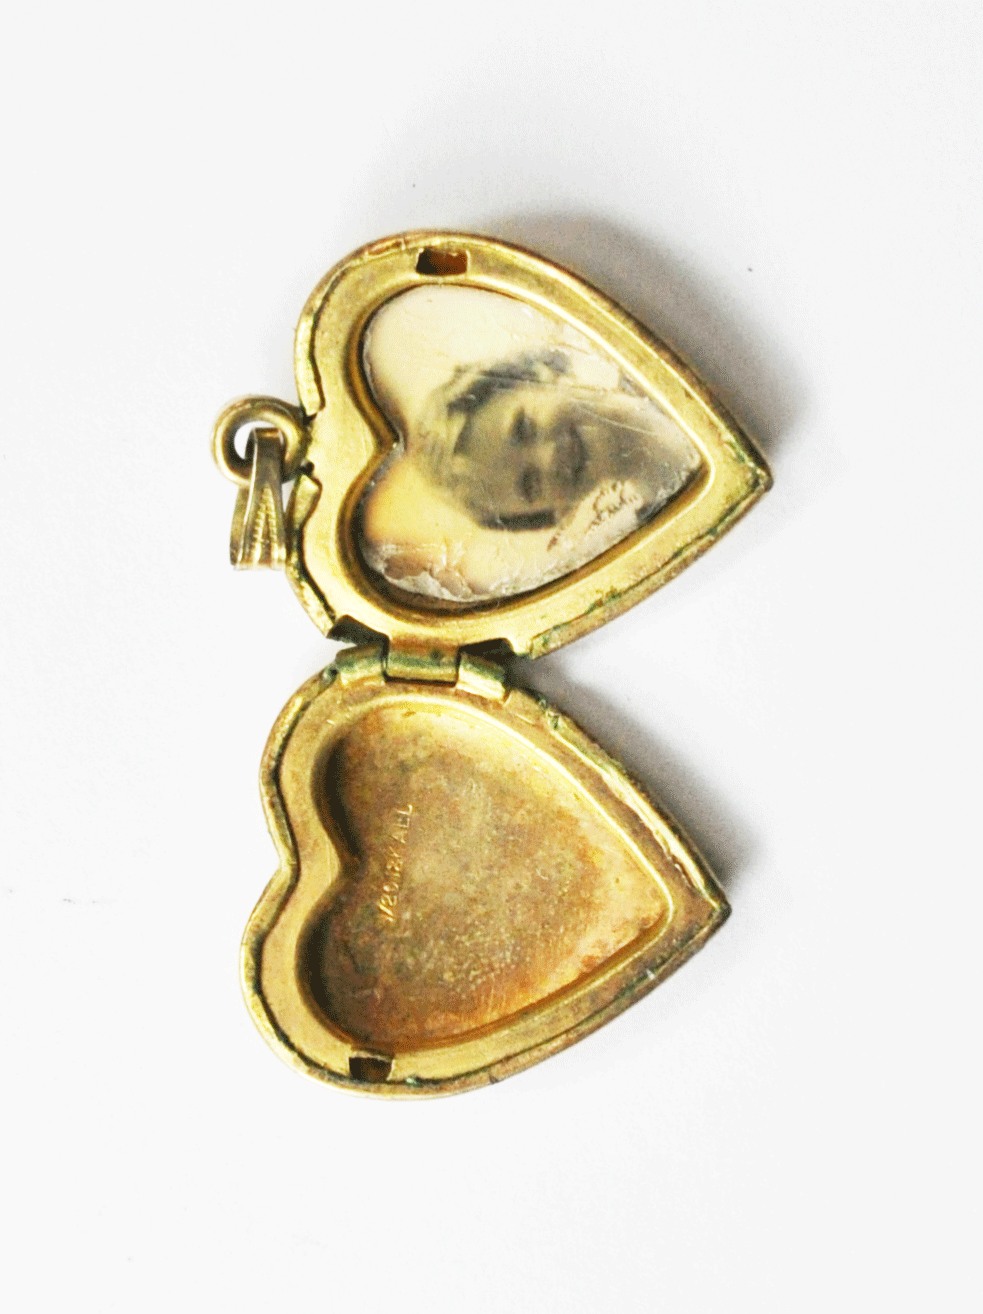 Gold Filled ALL Flower Heart Charm Locket Pendant 19mm x 23mm